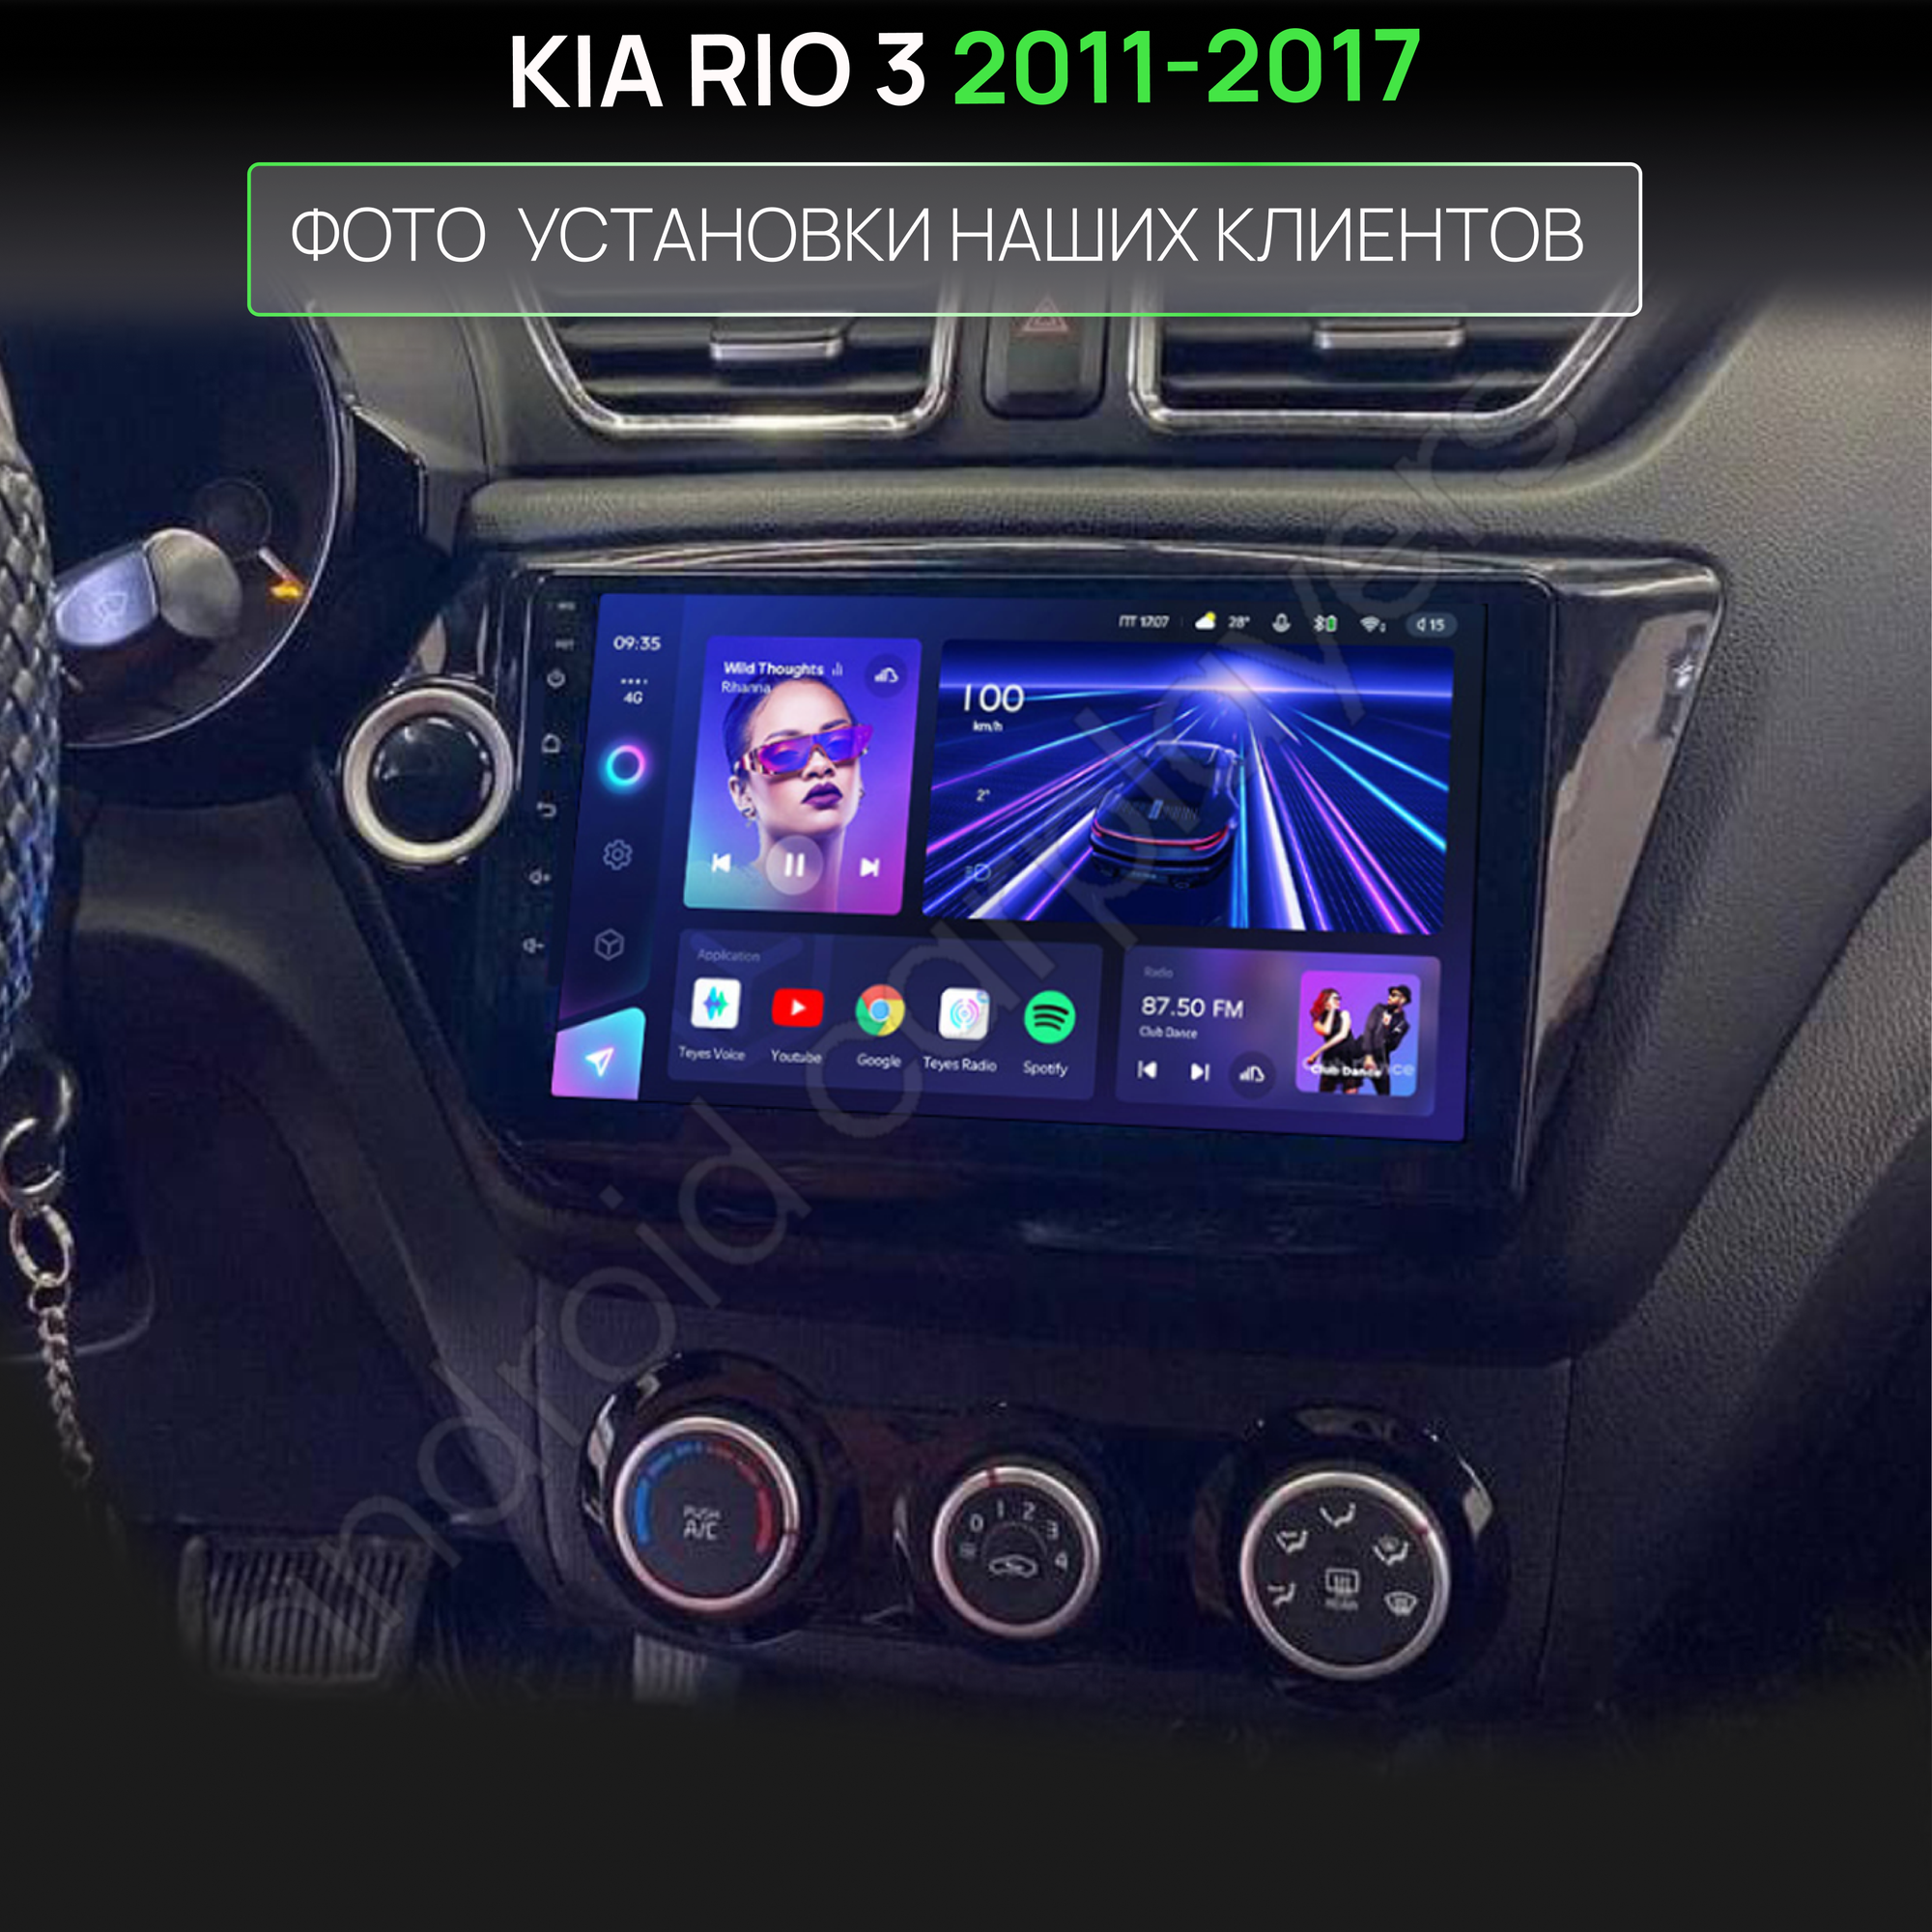 Магнитола для Kia Rio 3,4 ядра процессор 2/16Гб ANDROID 10, IPS экран 9 дюймов, Wifi, андроид штатная автомагнитола, головное устройство для Киа Рио